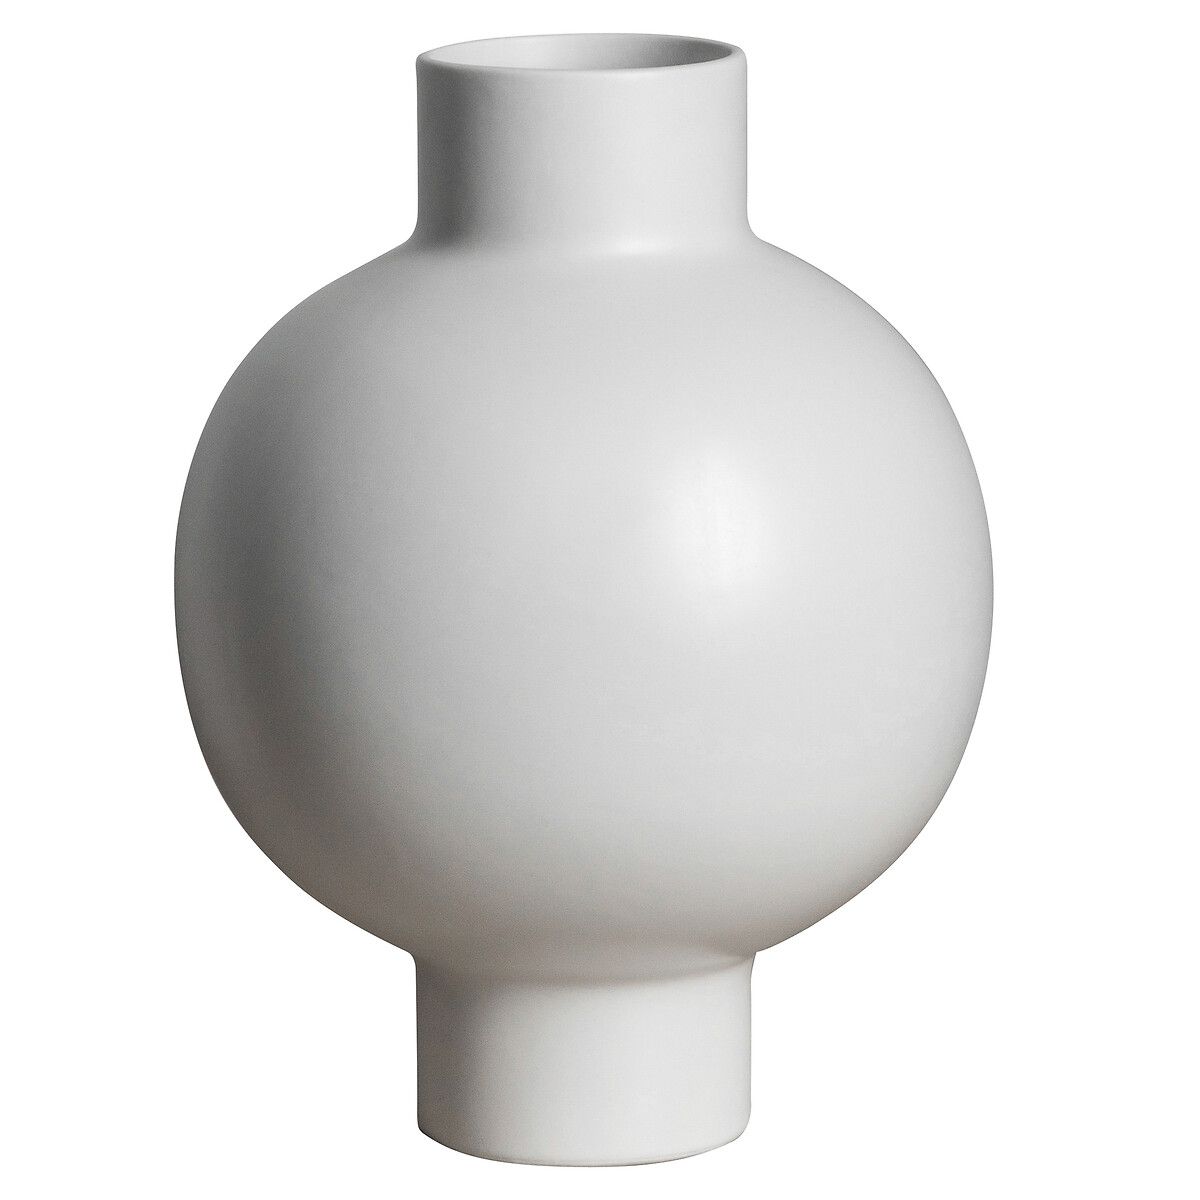 28cm White Ceramic Round Vase | La Redoute (UK)